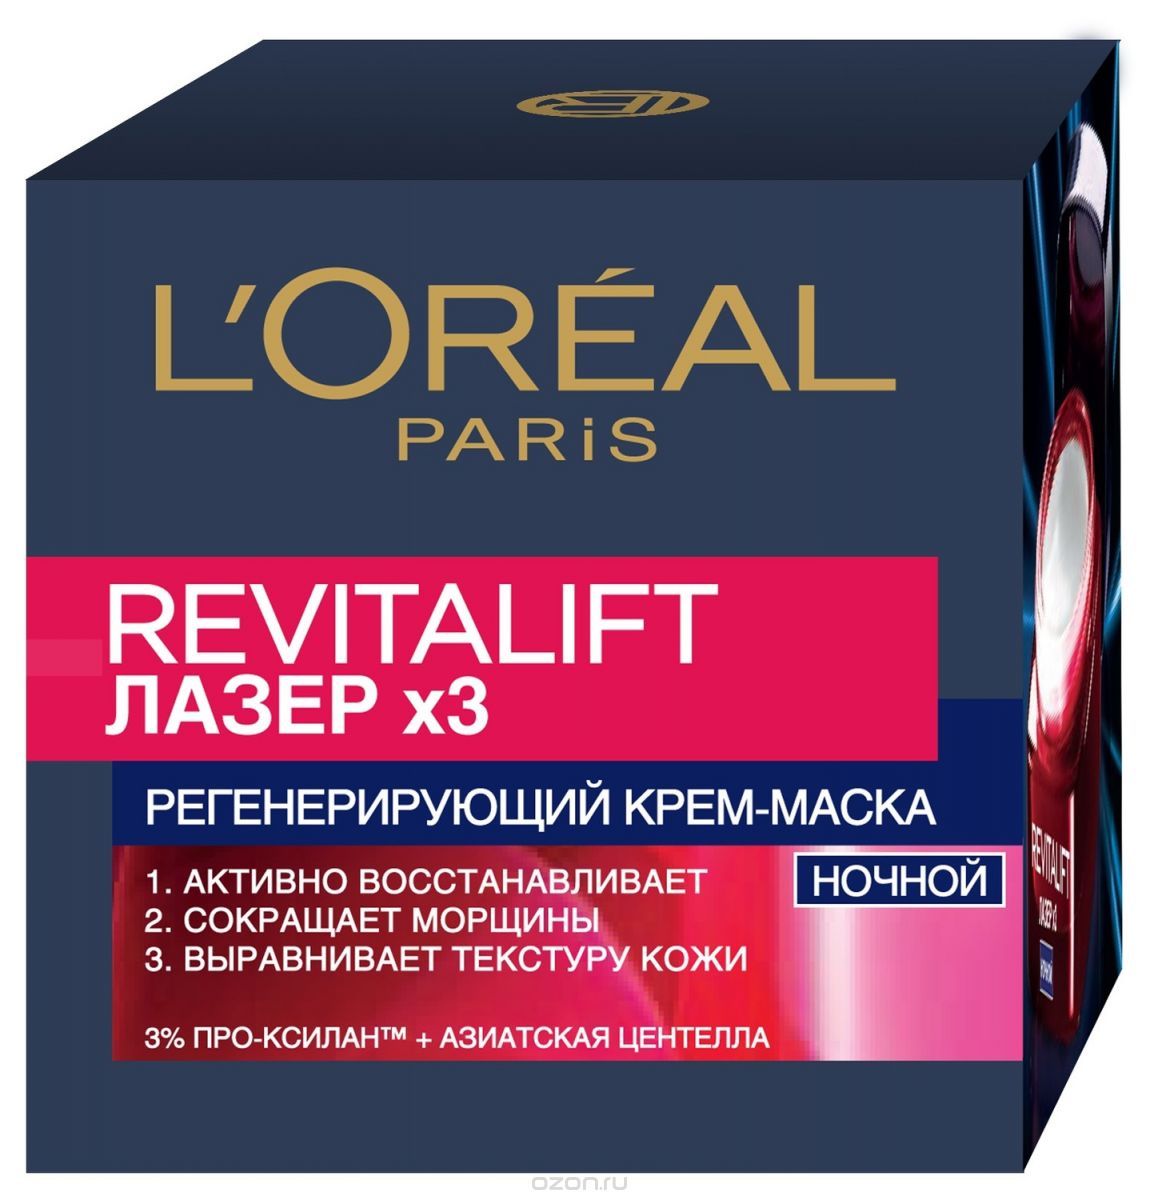 L`Oreal Revitalift Лазер Х3 Ночная крем-маска